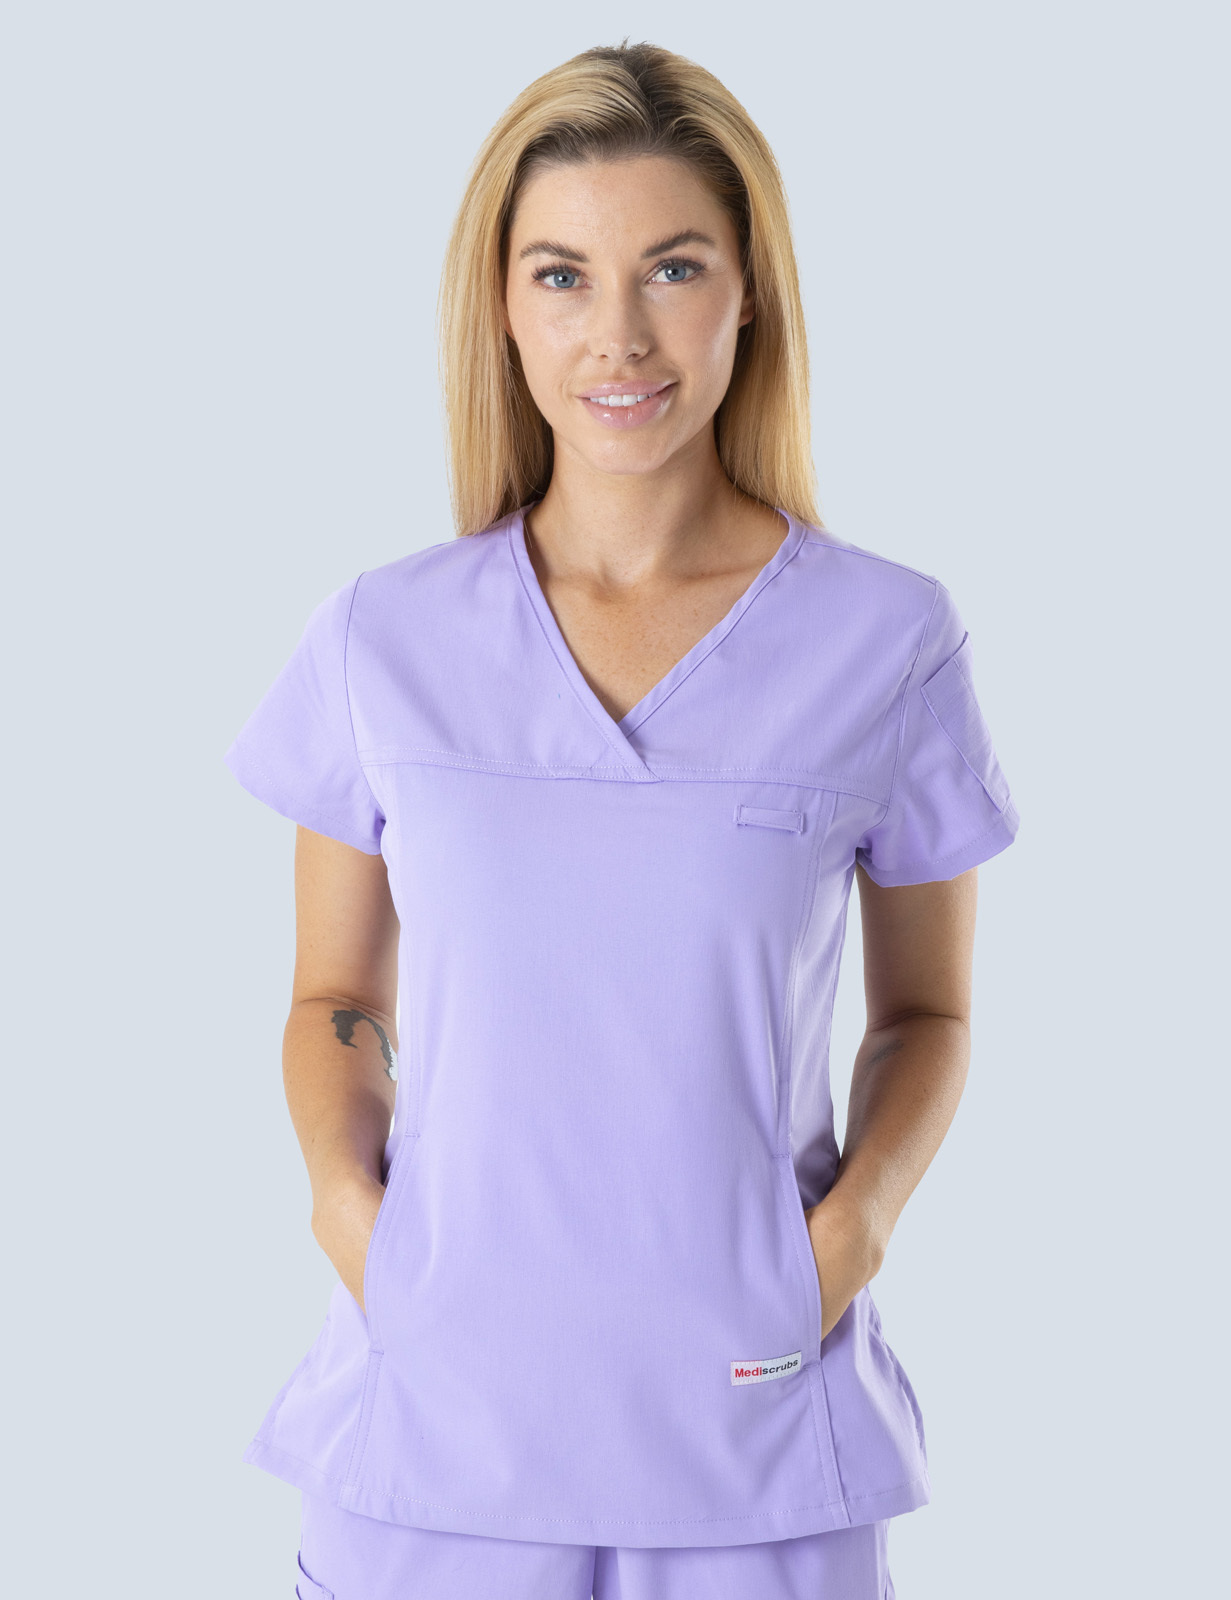 Queensland Children's Hospital Emergency Department Clinical Nurse  Uniform Top Bundle  (Women's Fit Top in Lilac  incl Logos)